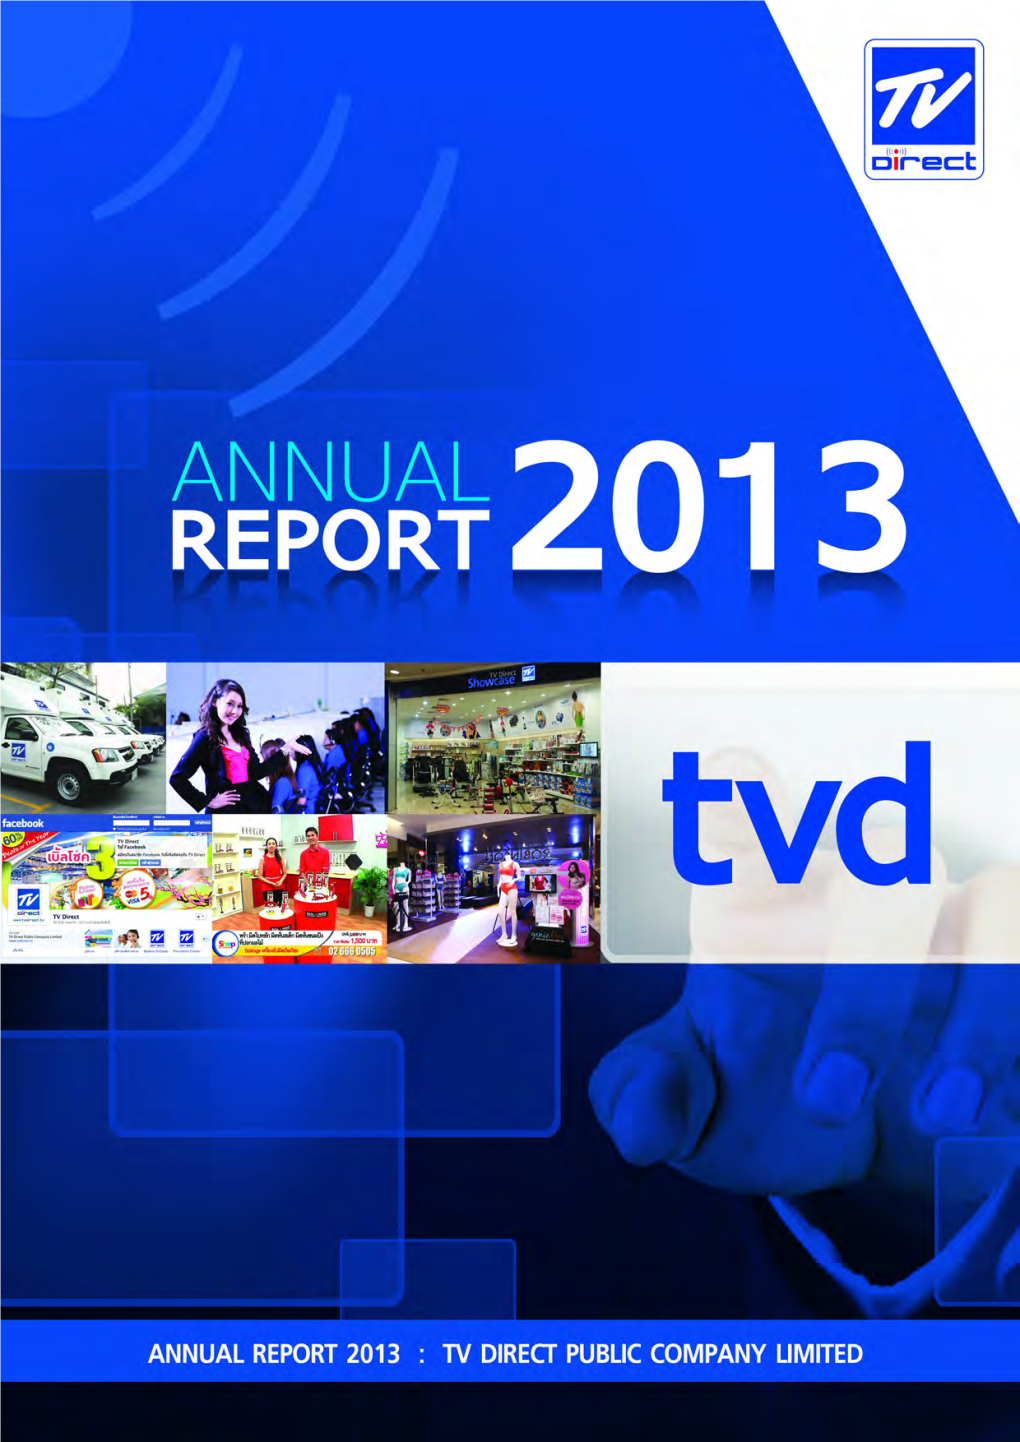 TVD: Tv Direct Public Company Limited | Annual Report 2013